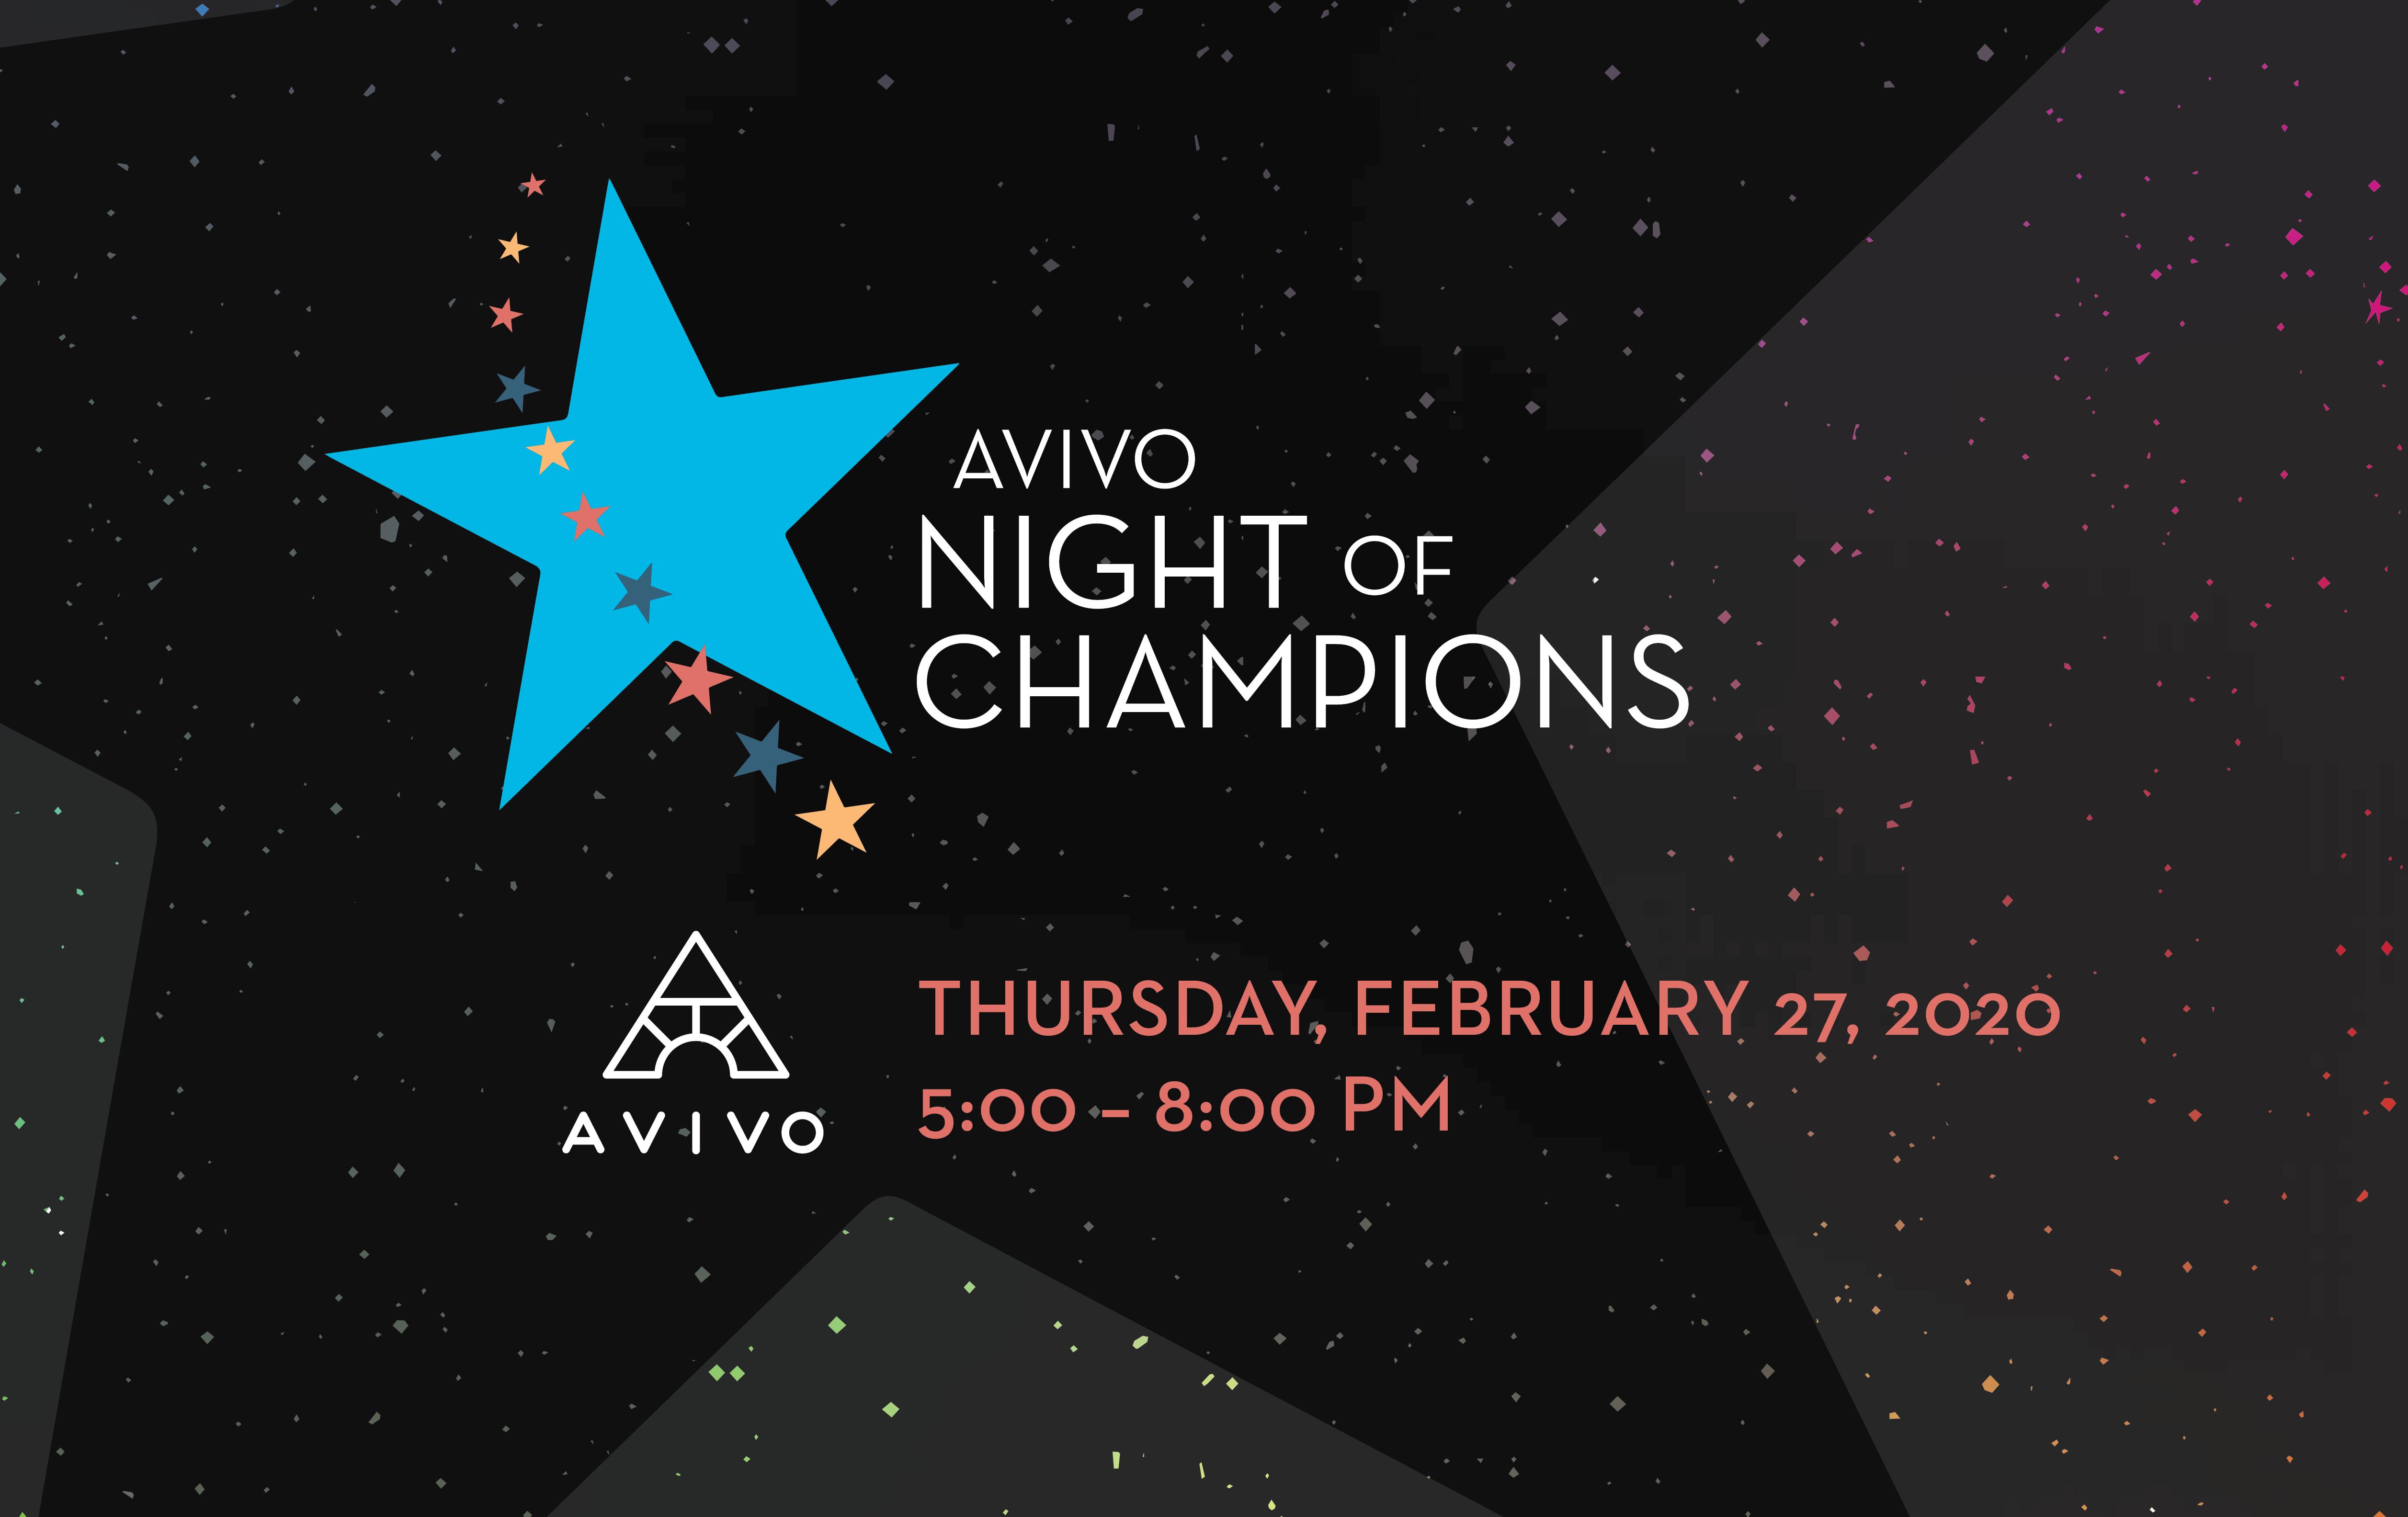 Avivo Night of Champions